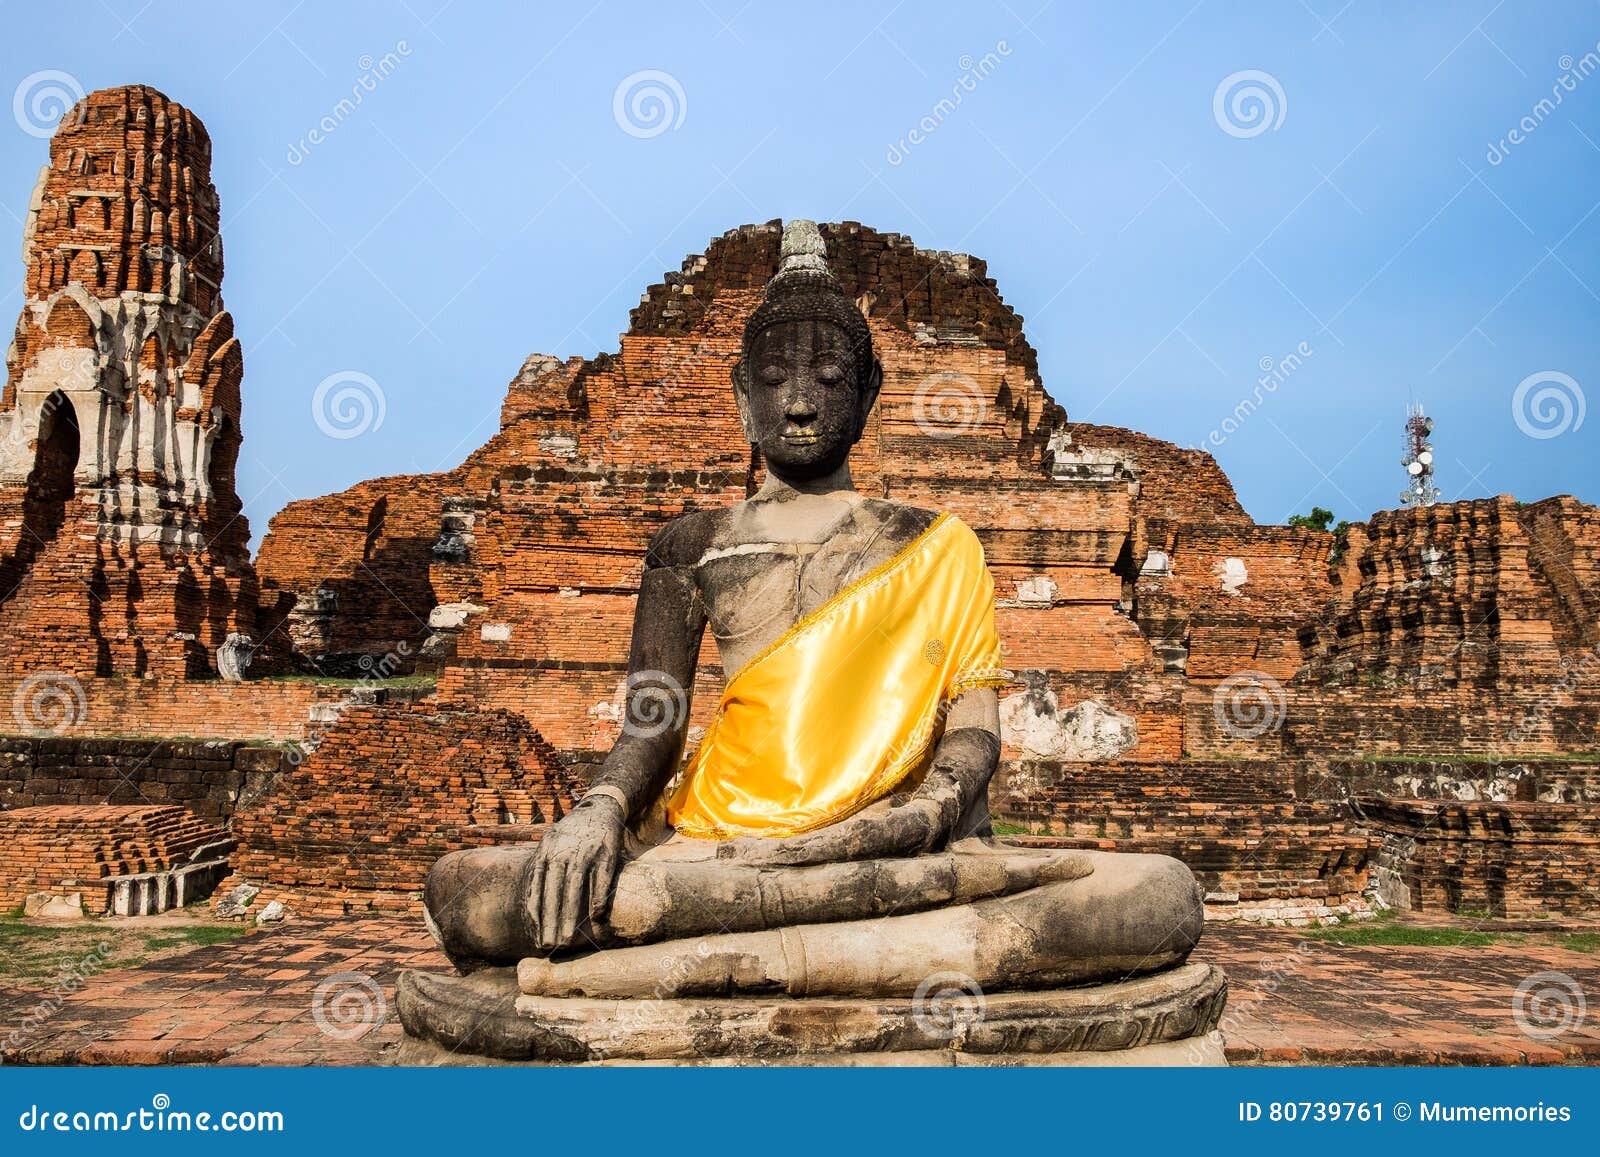 temple buddha statue pagoda ancient ruins invaluable